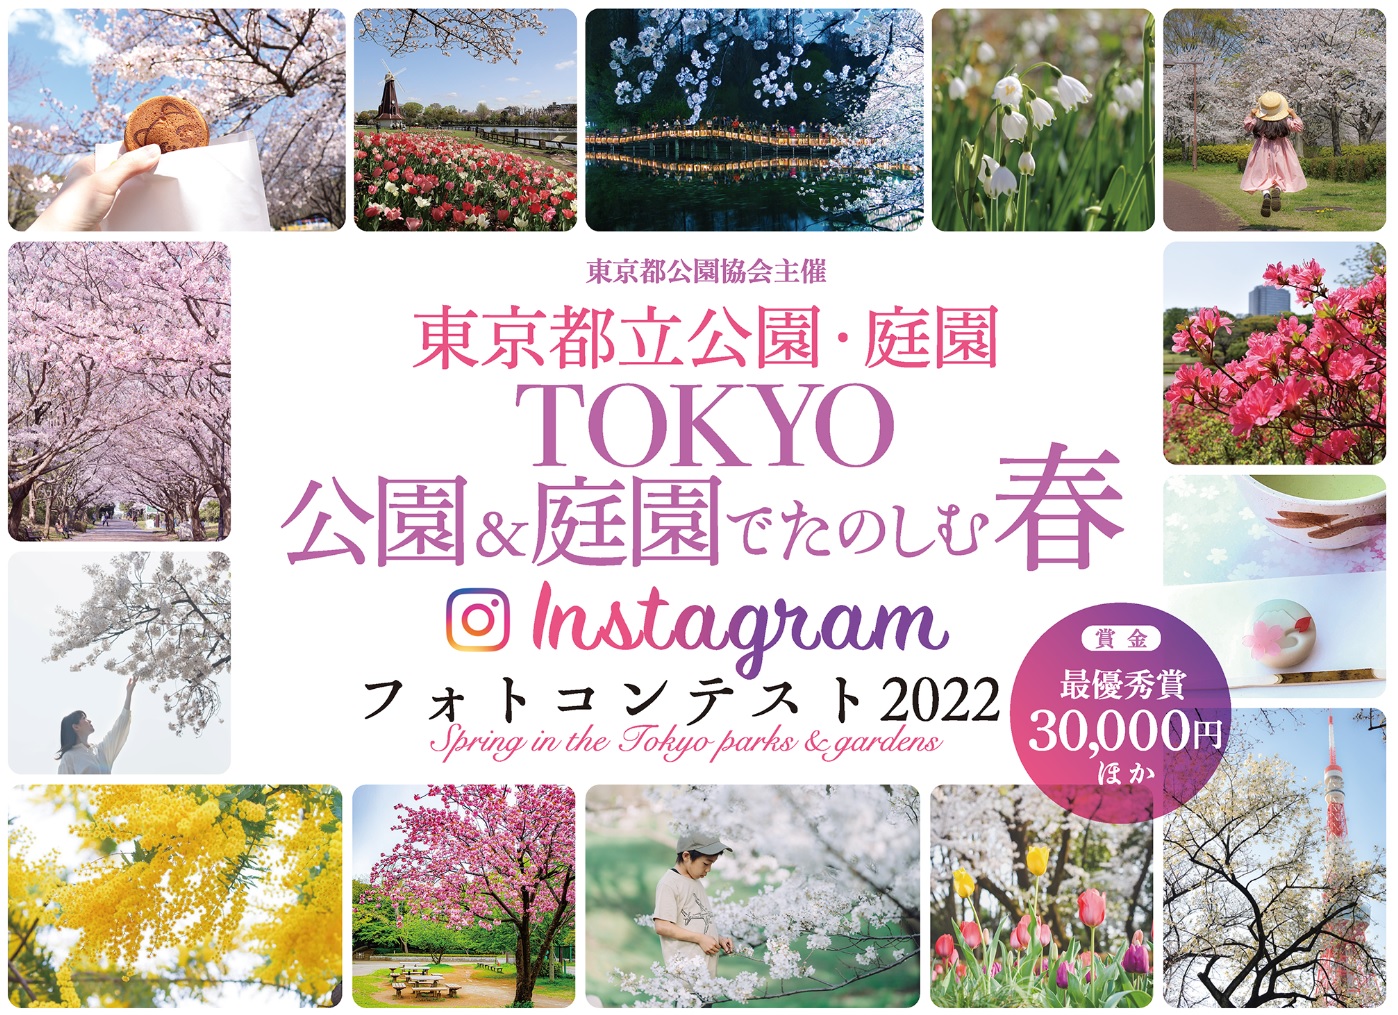 TOKYO 公園＆庭園でたのしむ春Instagramフォトコンテスト2022発表